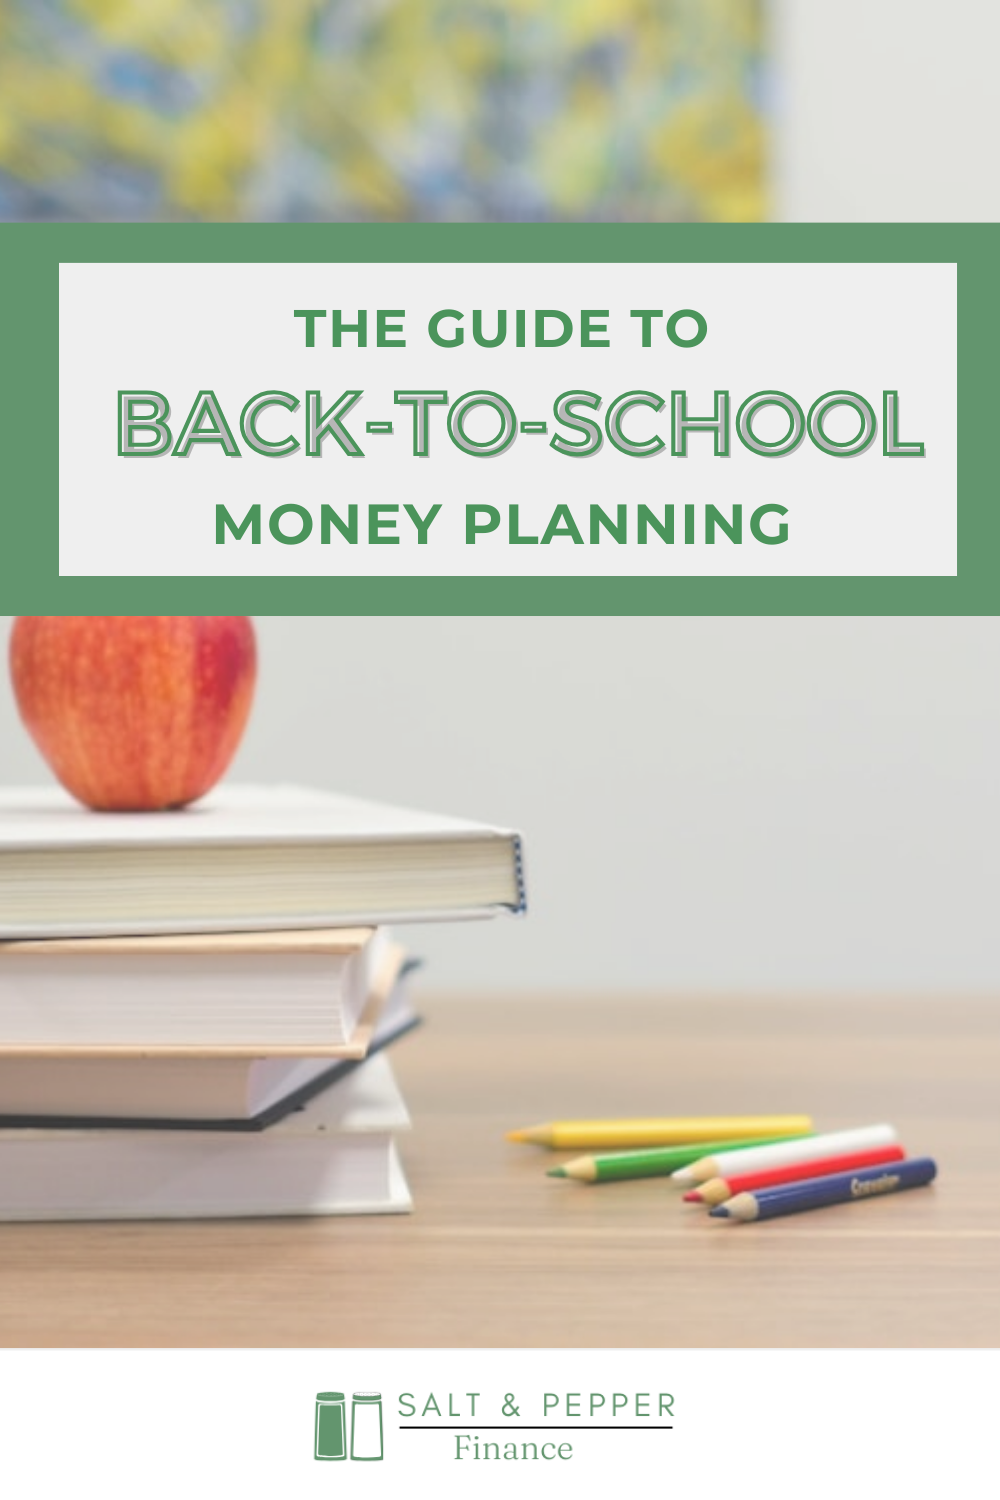 Preparing Financially for the School Year Ahead